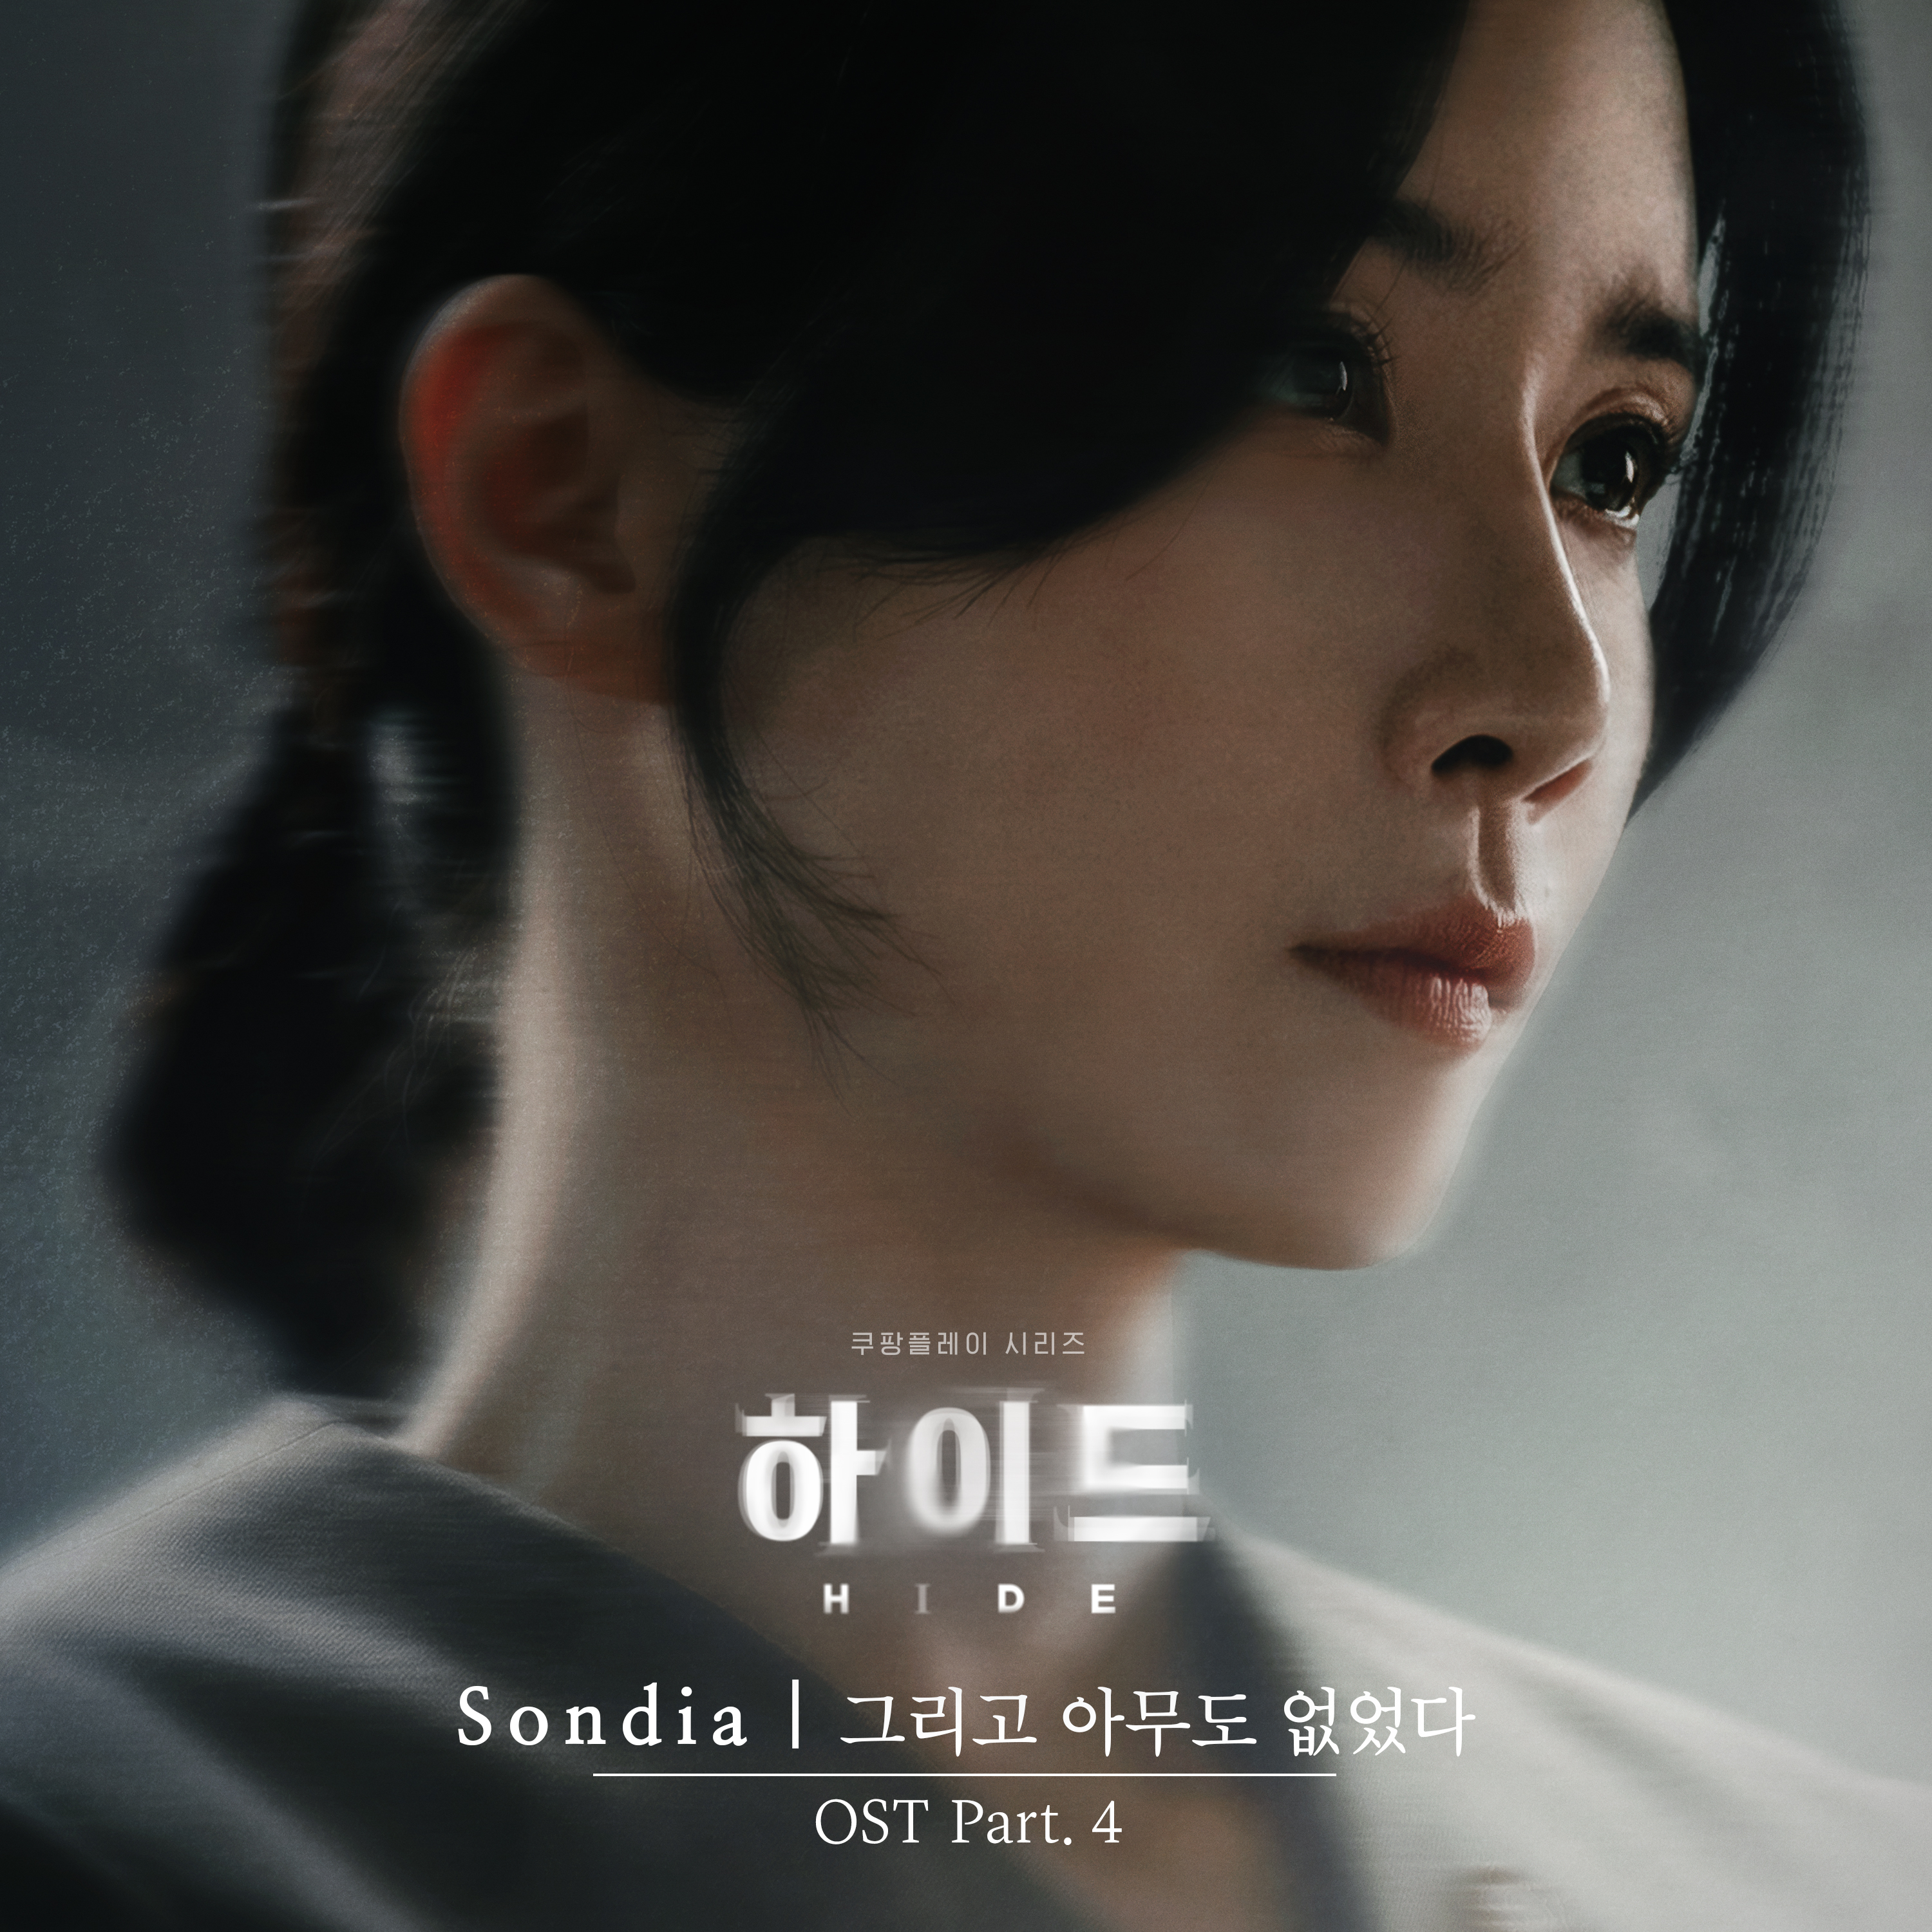 [情報] HIDE OST Part.4 - Sondia